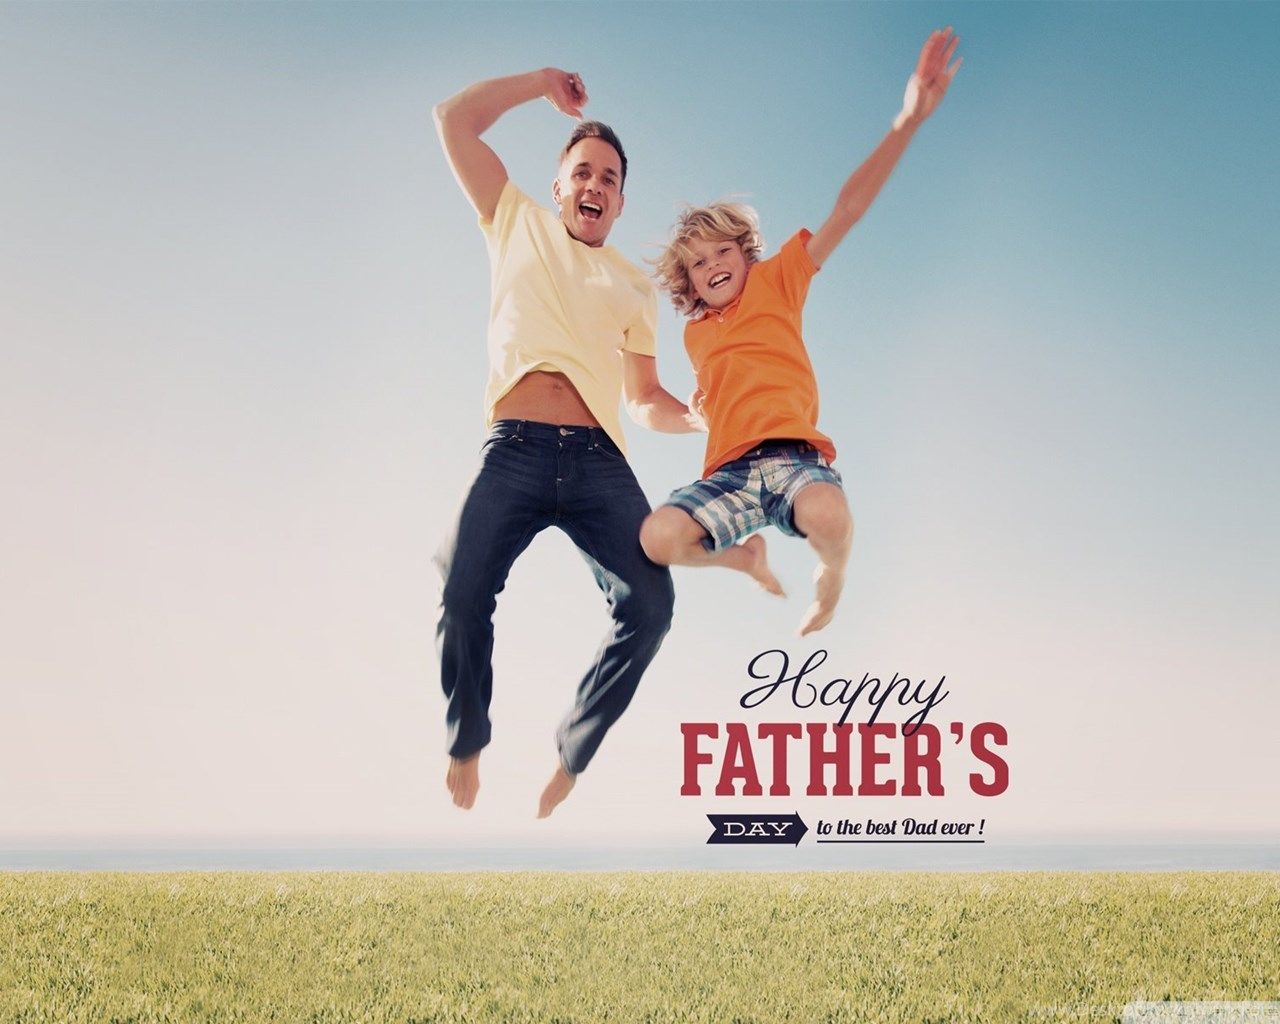 Fathers Day HD Desktop Wallpaper, High Definition, Fullscreen. Desktop Background